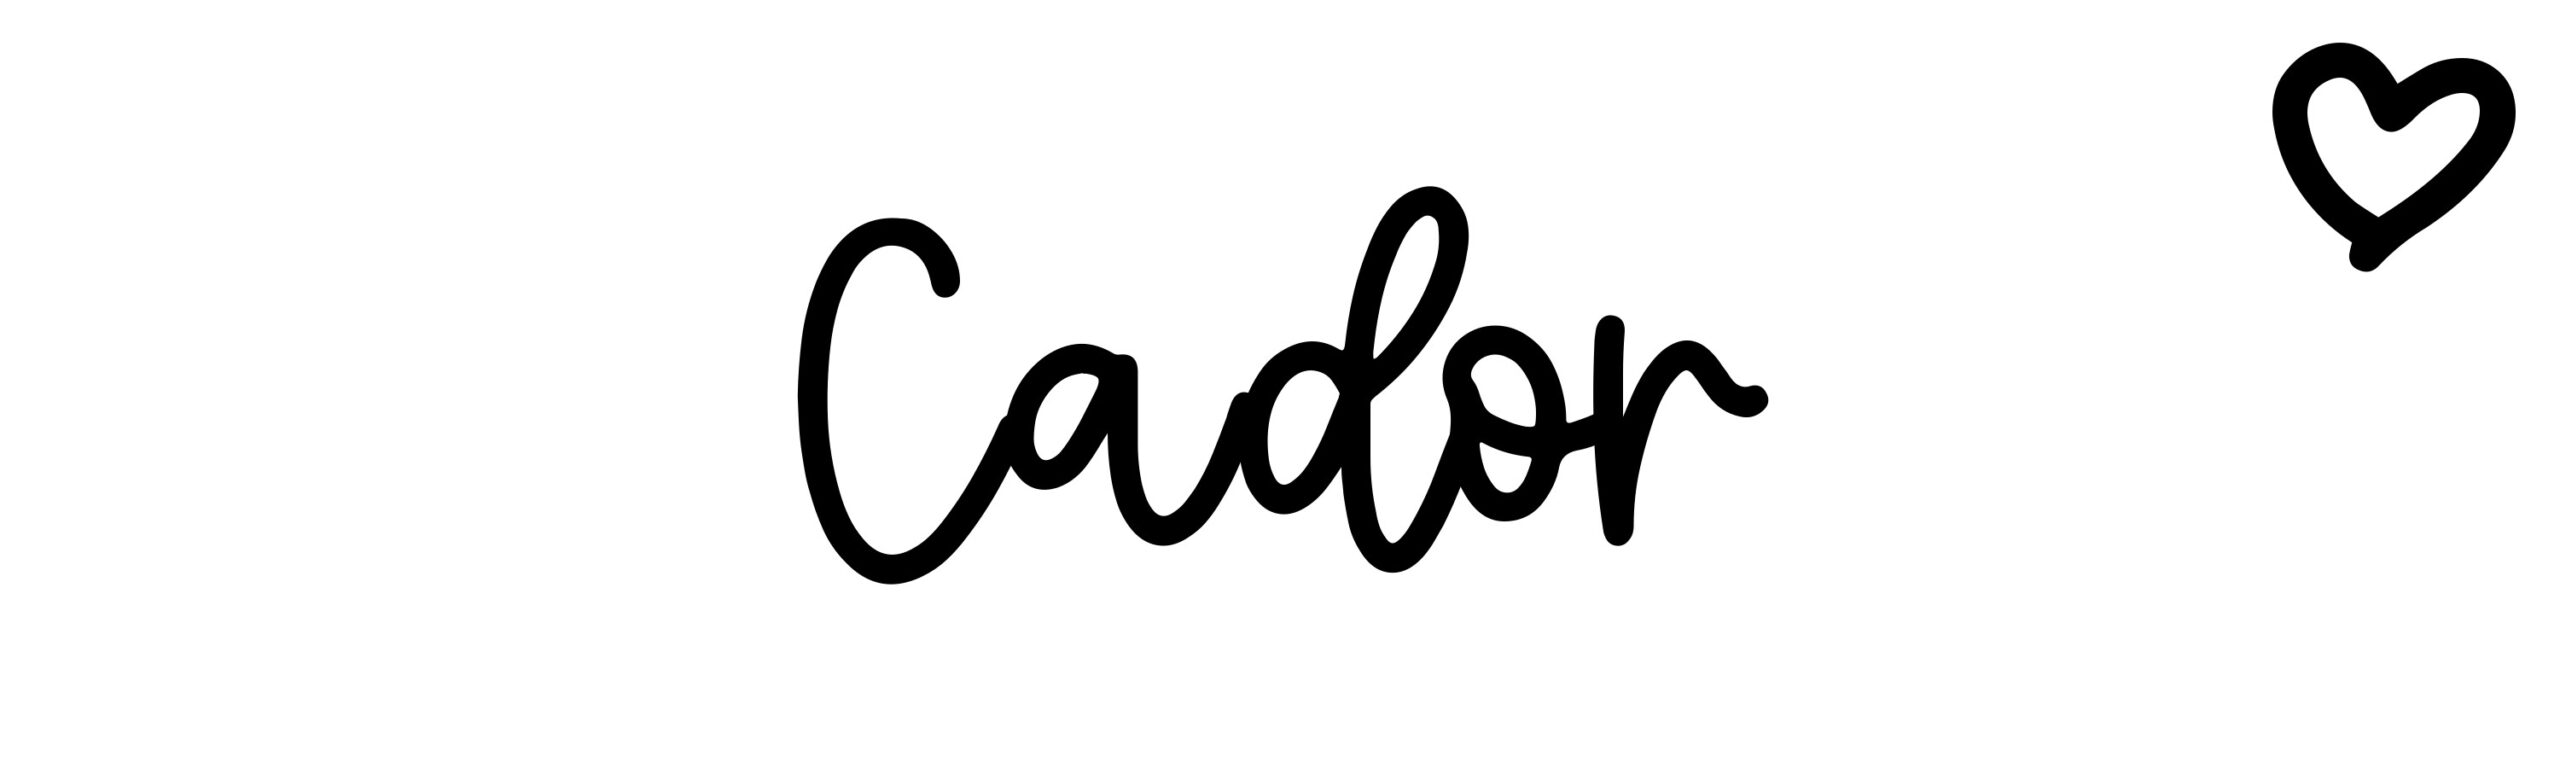 Cador: Name meaning & origin at ClickBabyNames